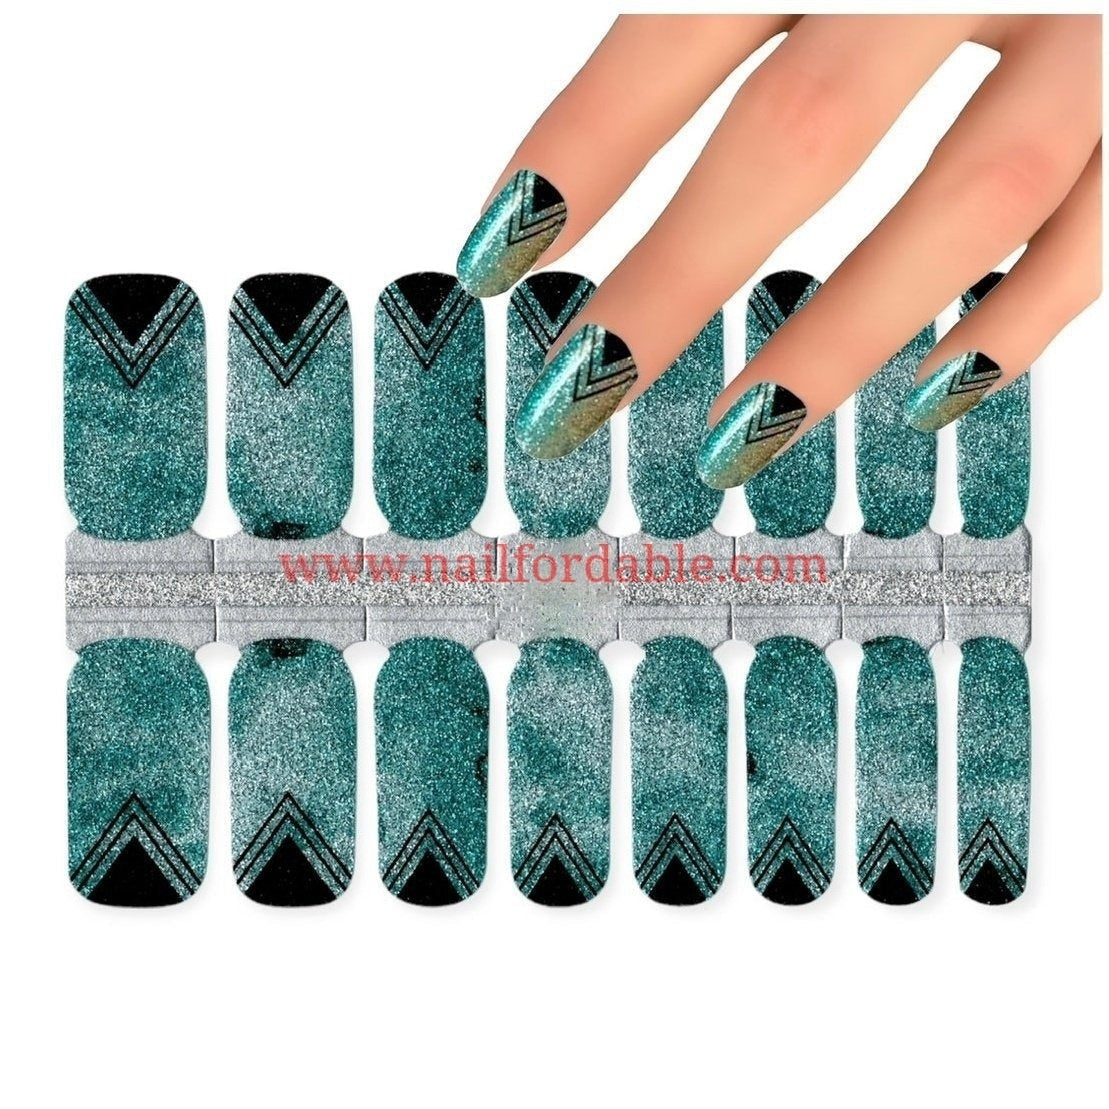 Black Pyramid Nail Wraps | Semi Cured Gel Wraps | Gel Nail Wraps |Nail Polish | Nail Stickers